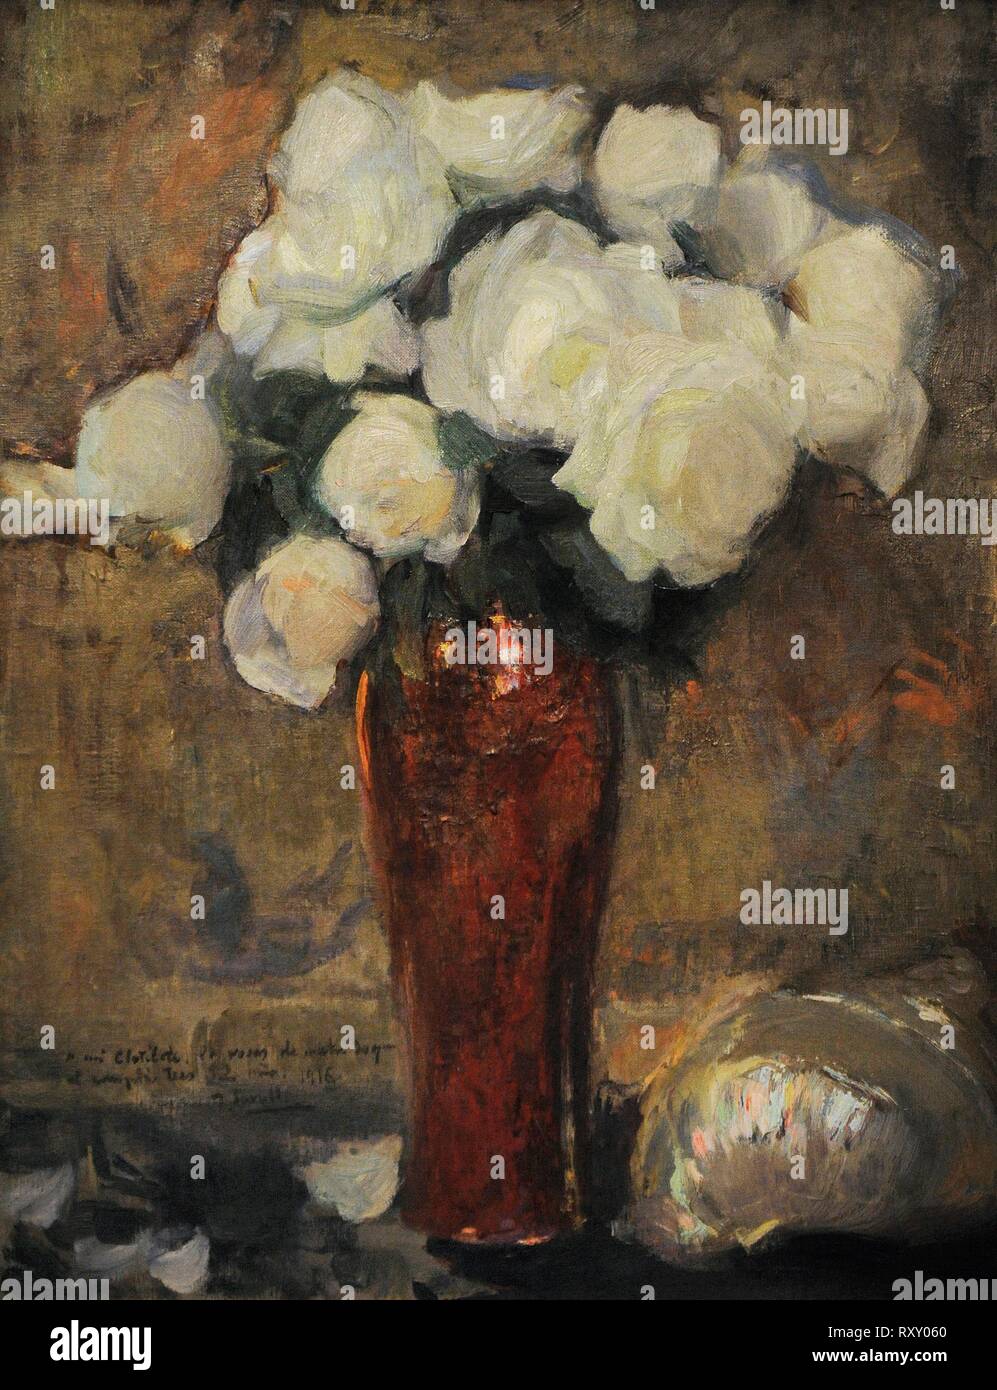 Joaquín Sorolla y Bastida (1863-1923). Pintor español. Rosas blancas, 1916. Oleo sobre lienzo, 60 x 47 cm. Museo Sorolla. Madrid. España. Stock Photo